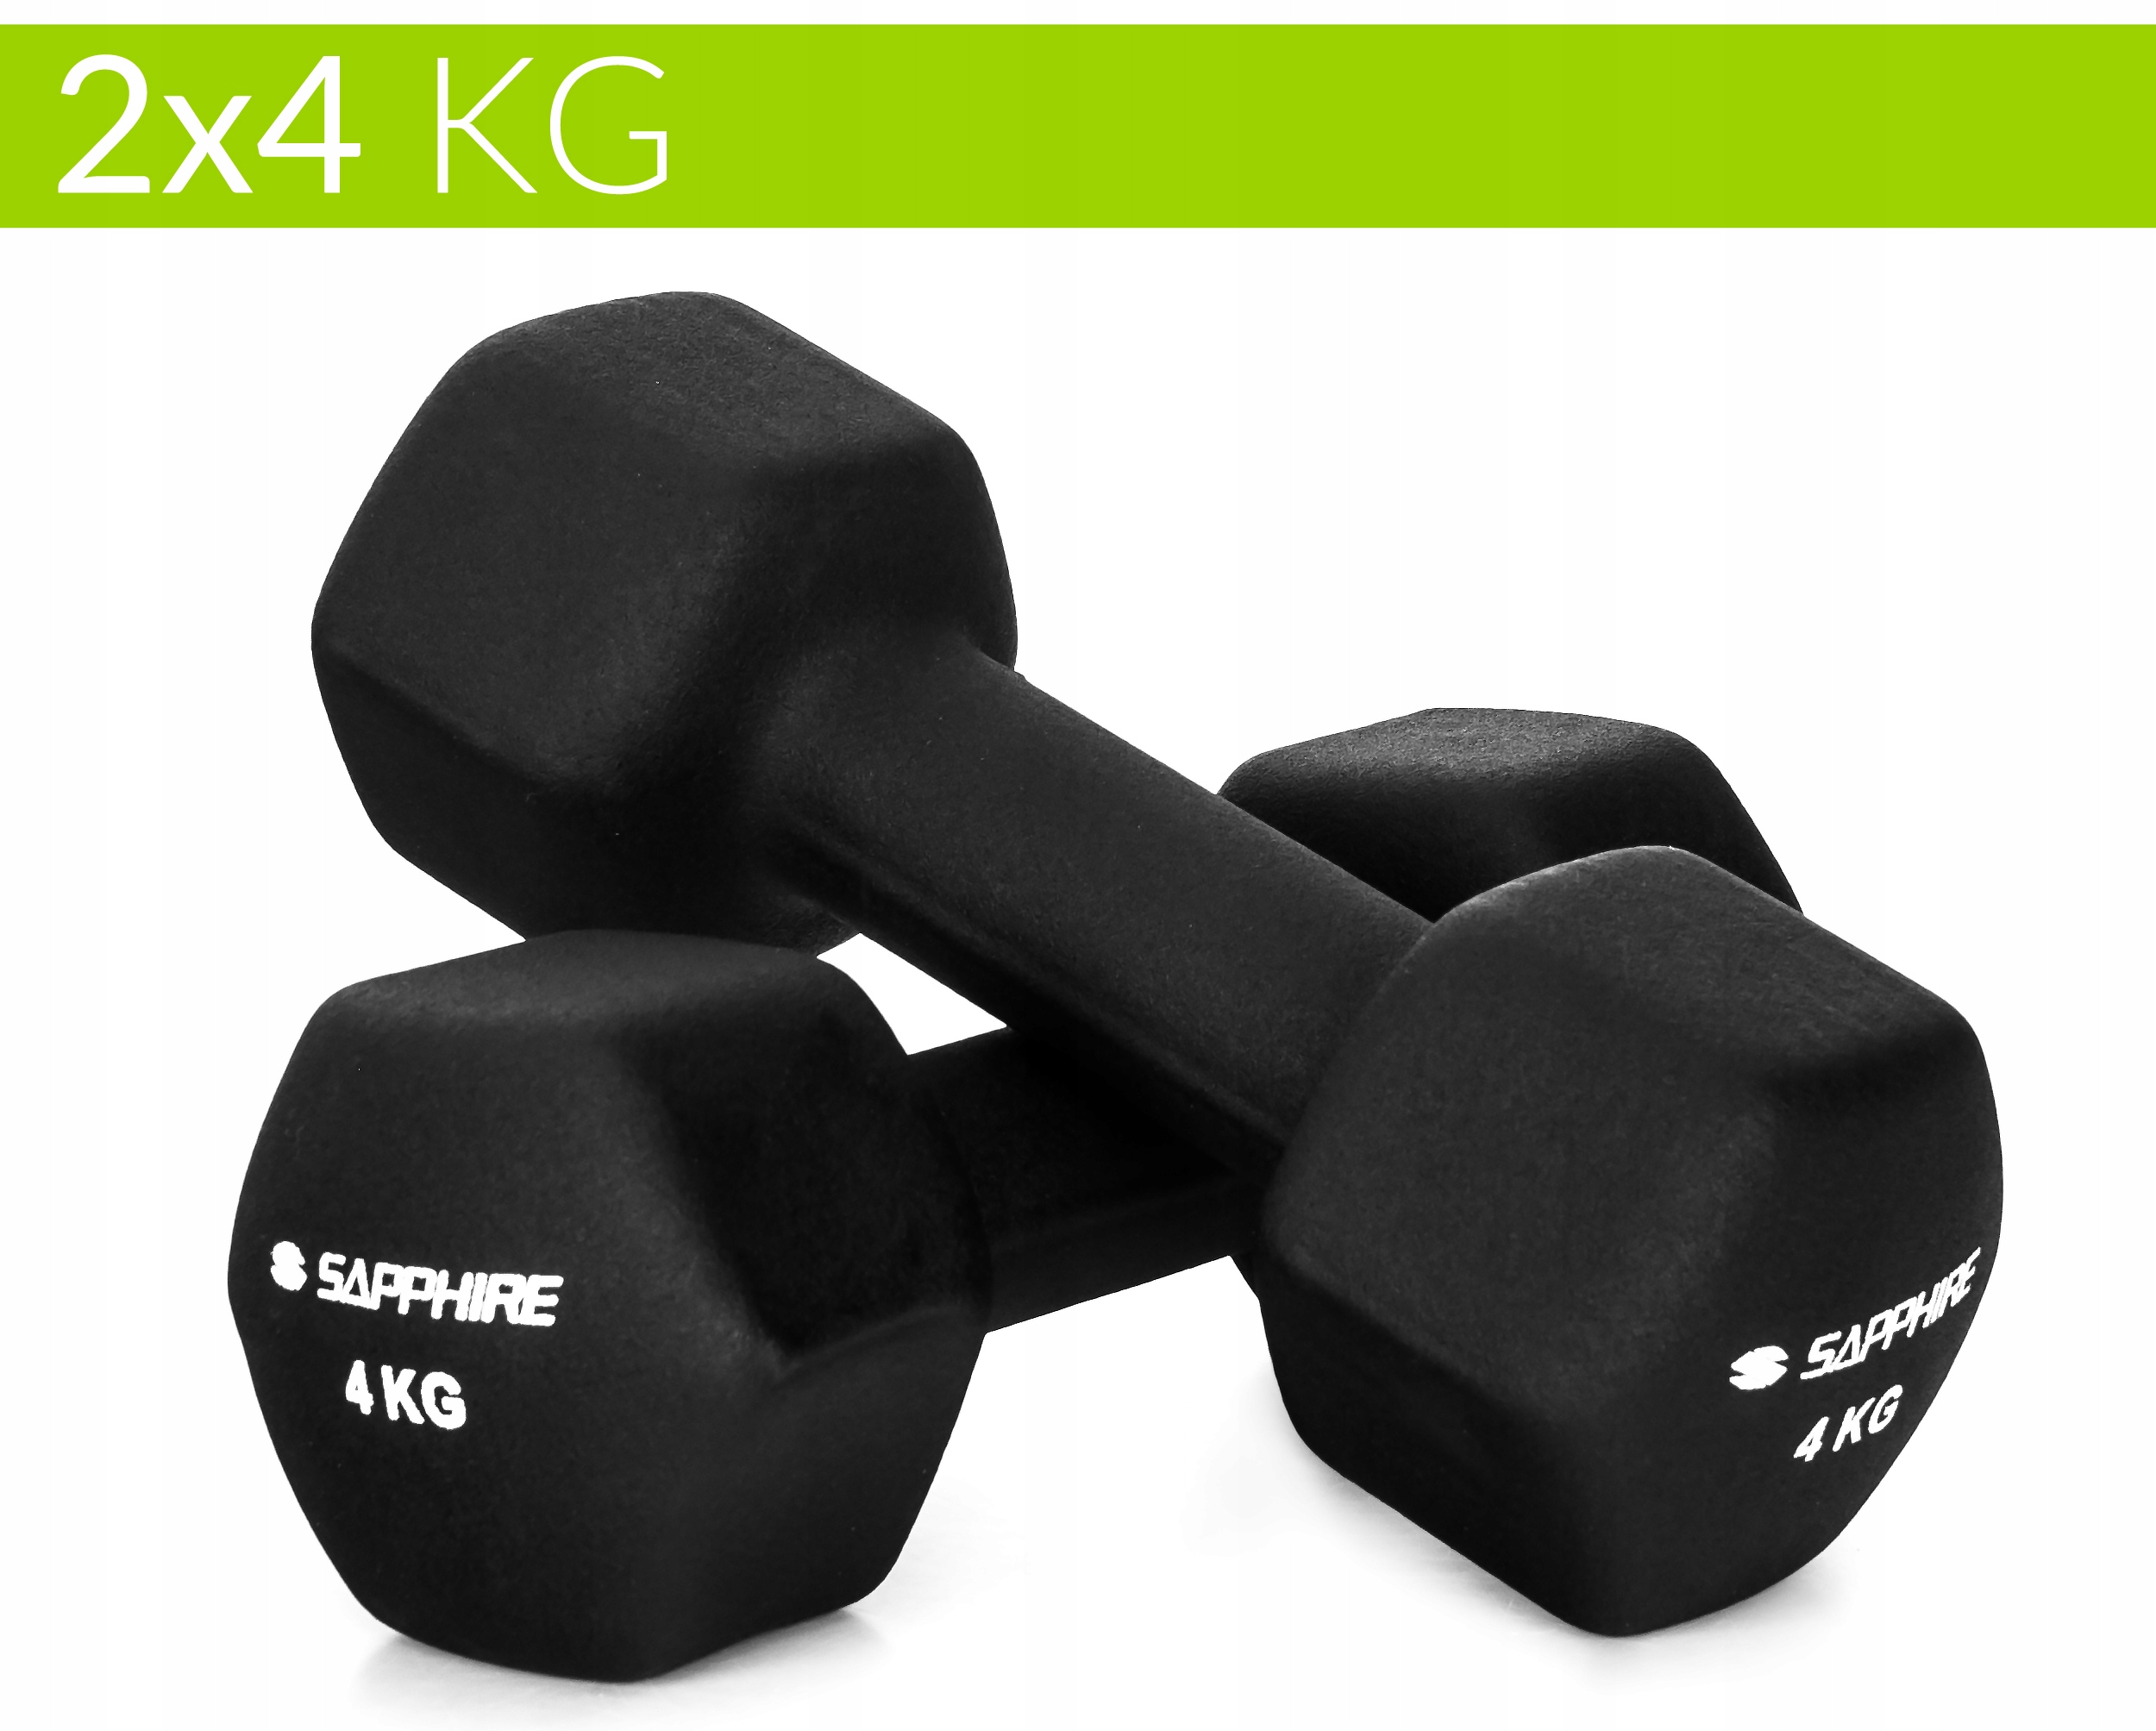 Hantelki fitness Sapphire SG-1104DV 2x4 kg